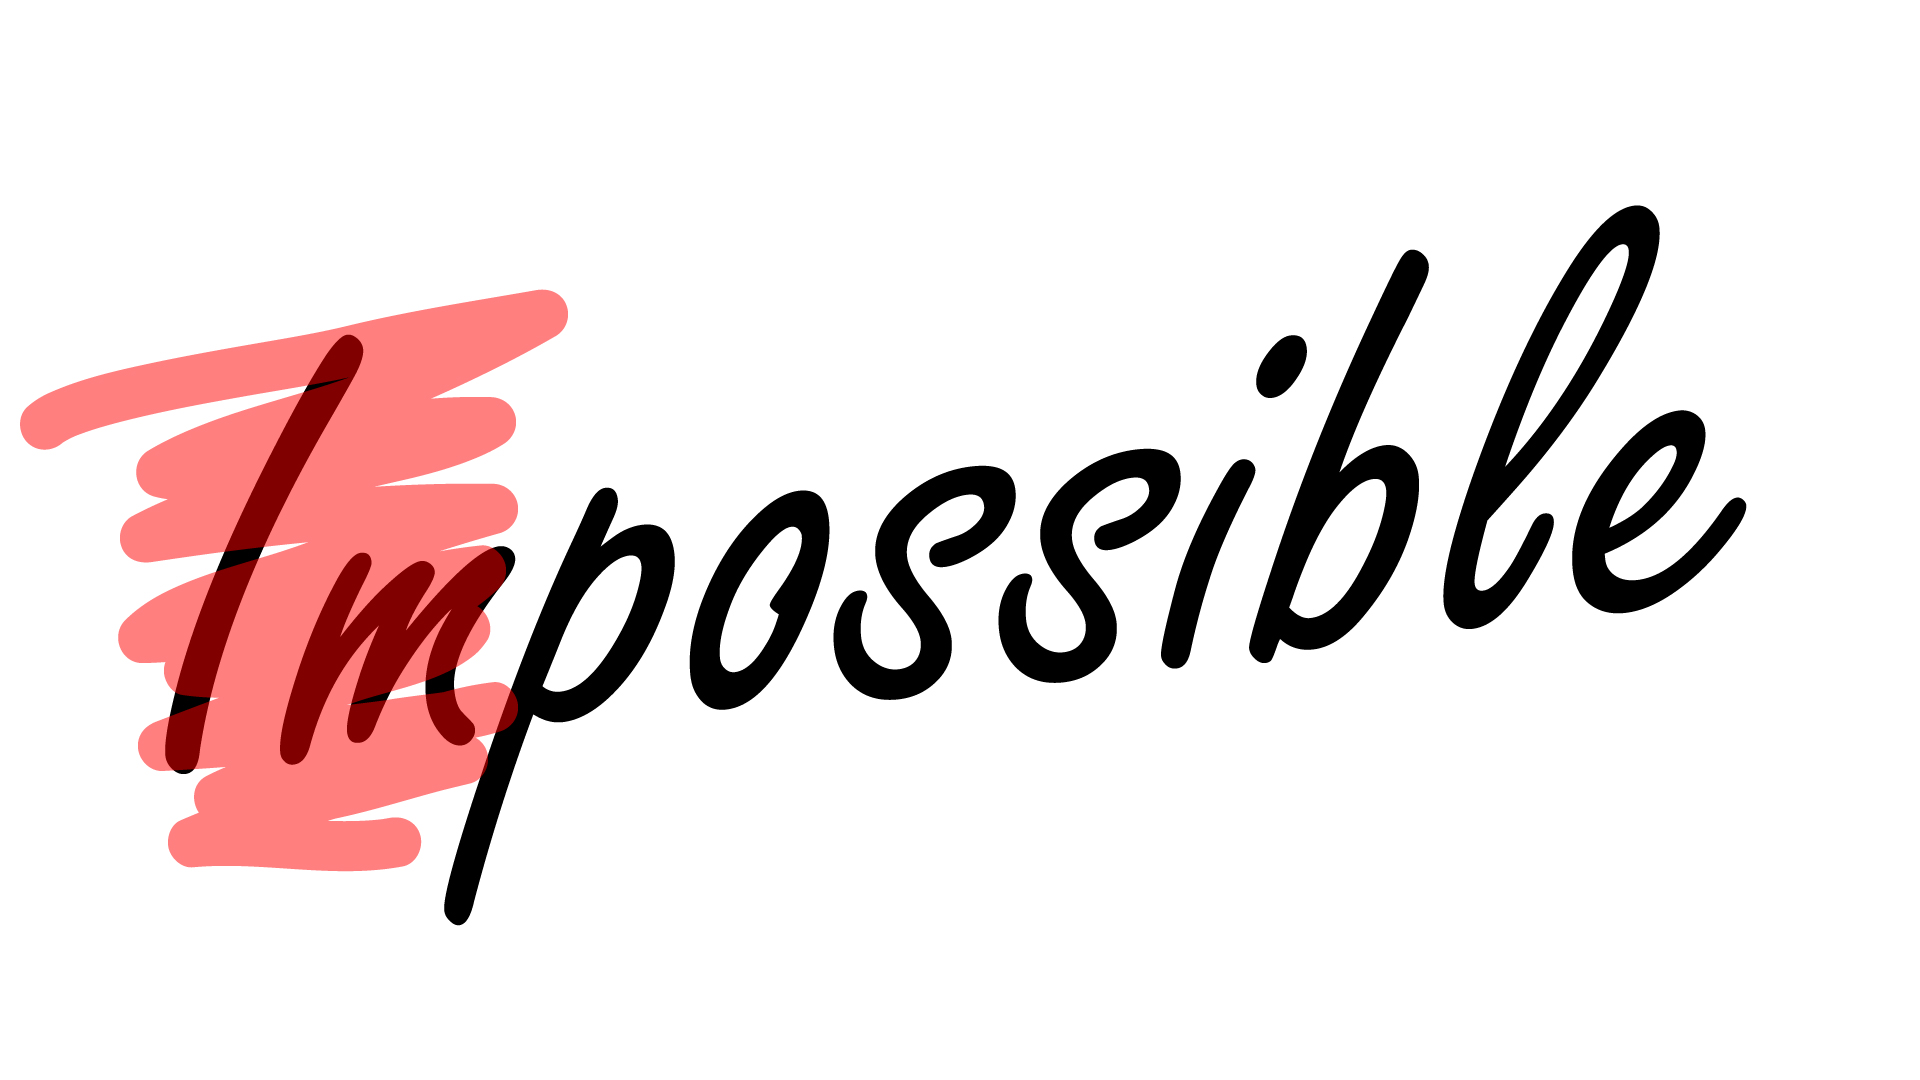 Life is possible. Impossible надпись. Импасибал. Значок possible. Иконка Impossible.